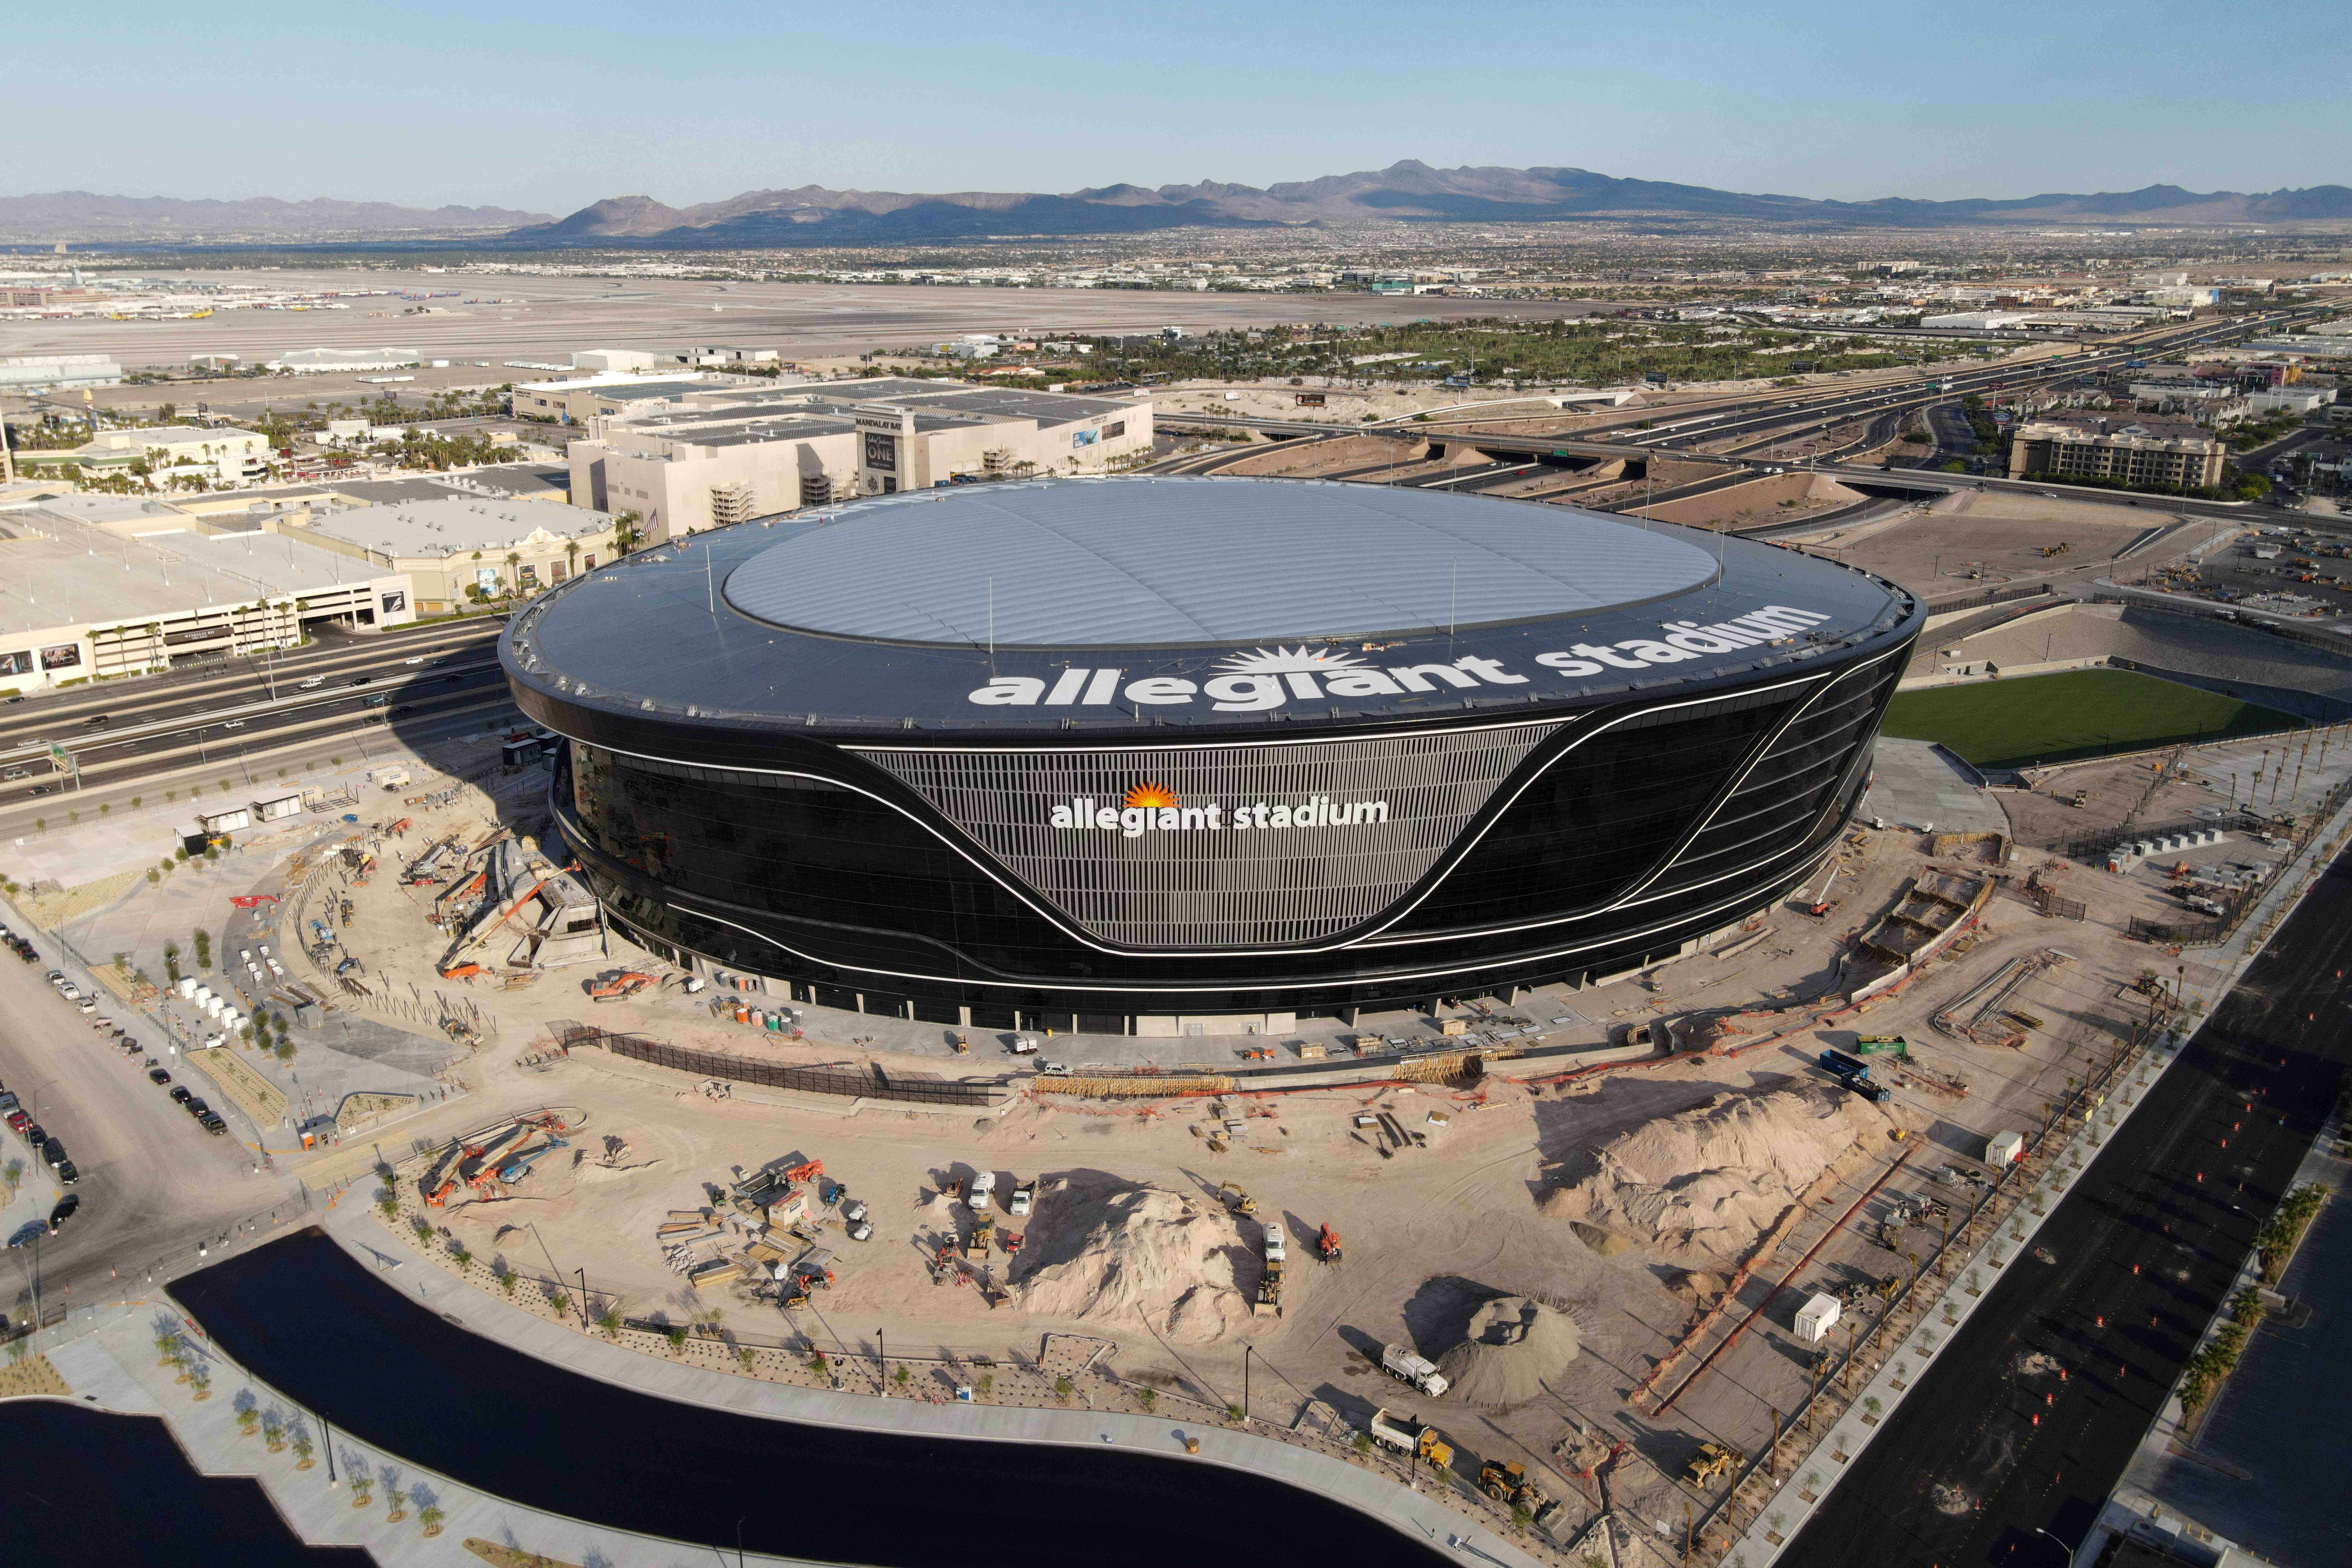 NFL: Raiders Relocate to Las Vegas